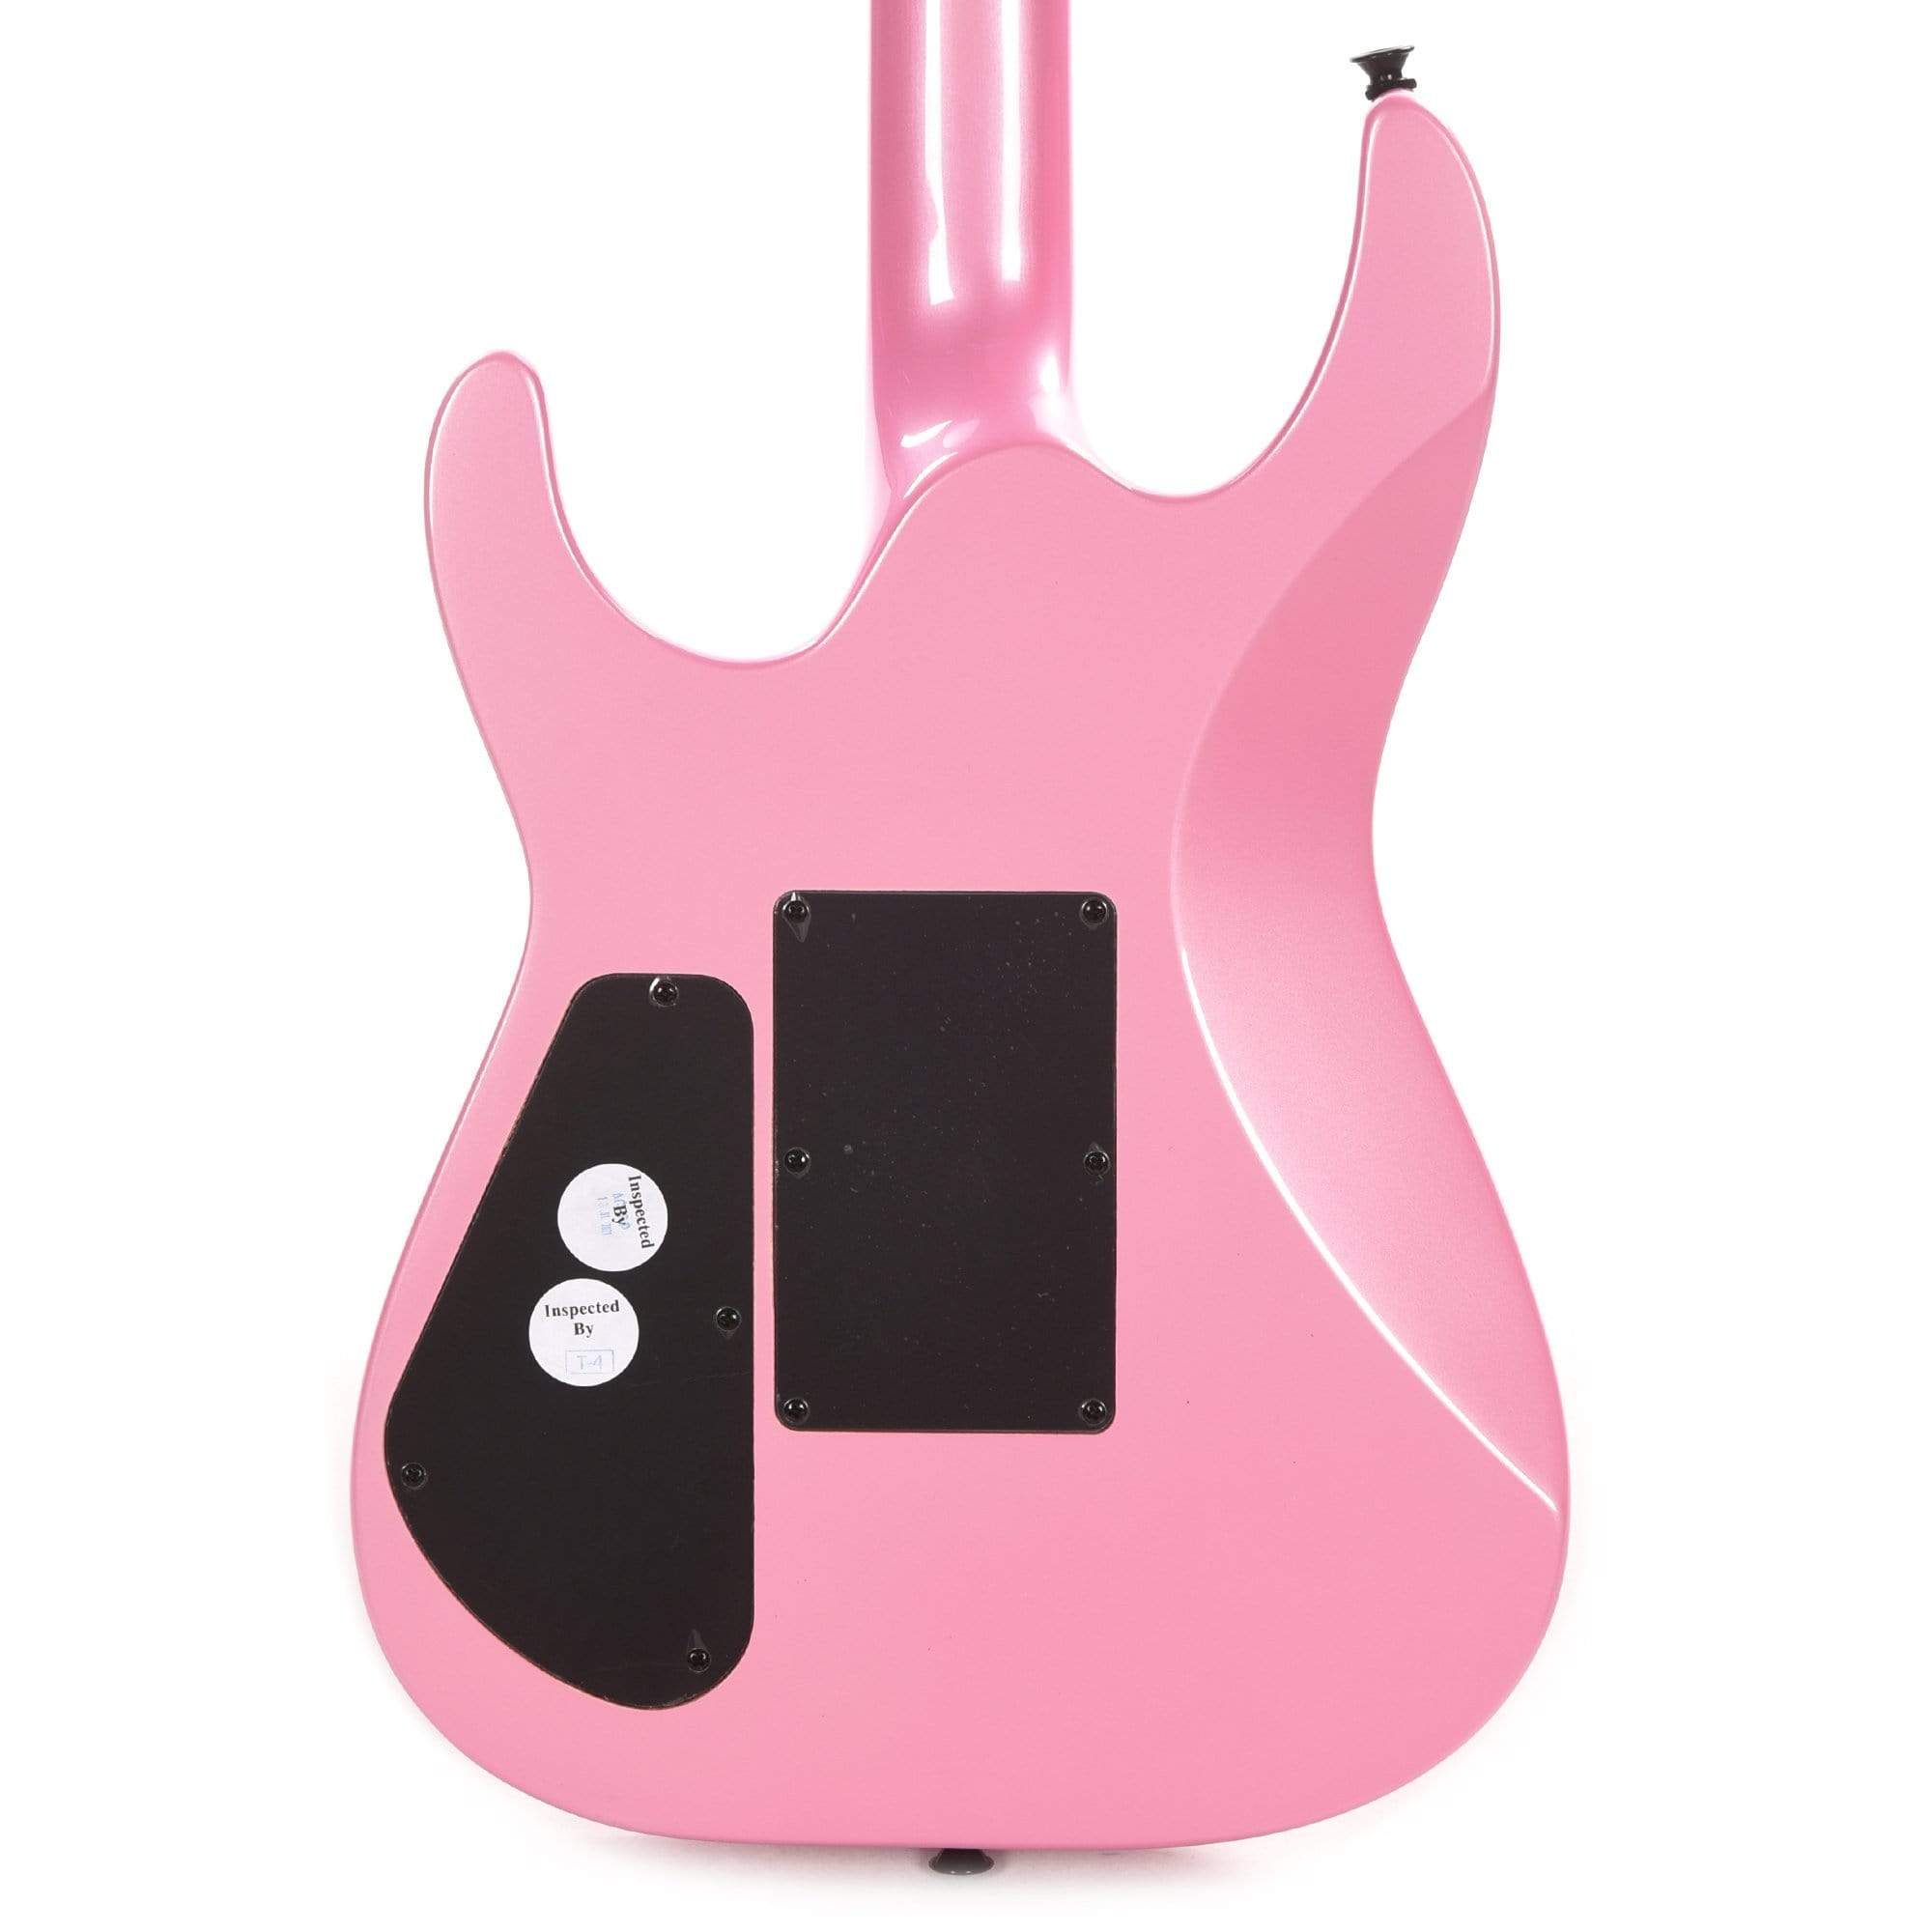 Jackson X Series Soloist SL1X Platinum Pink Electric Guitars / Solid Body